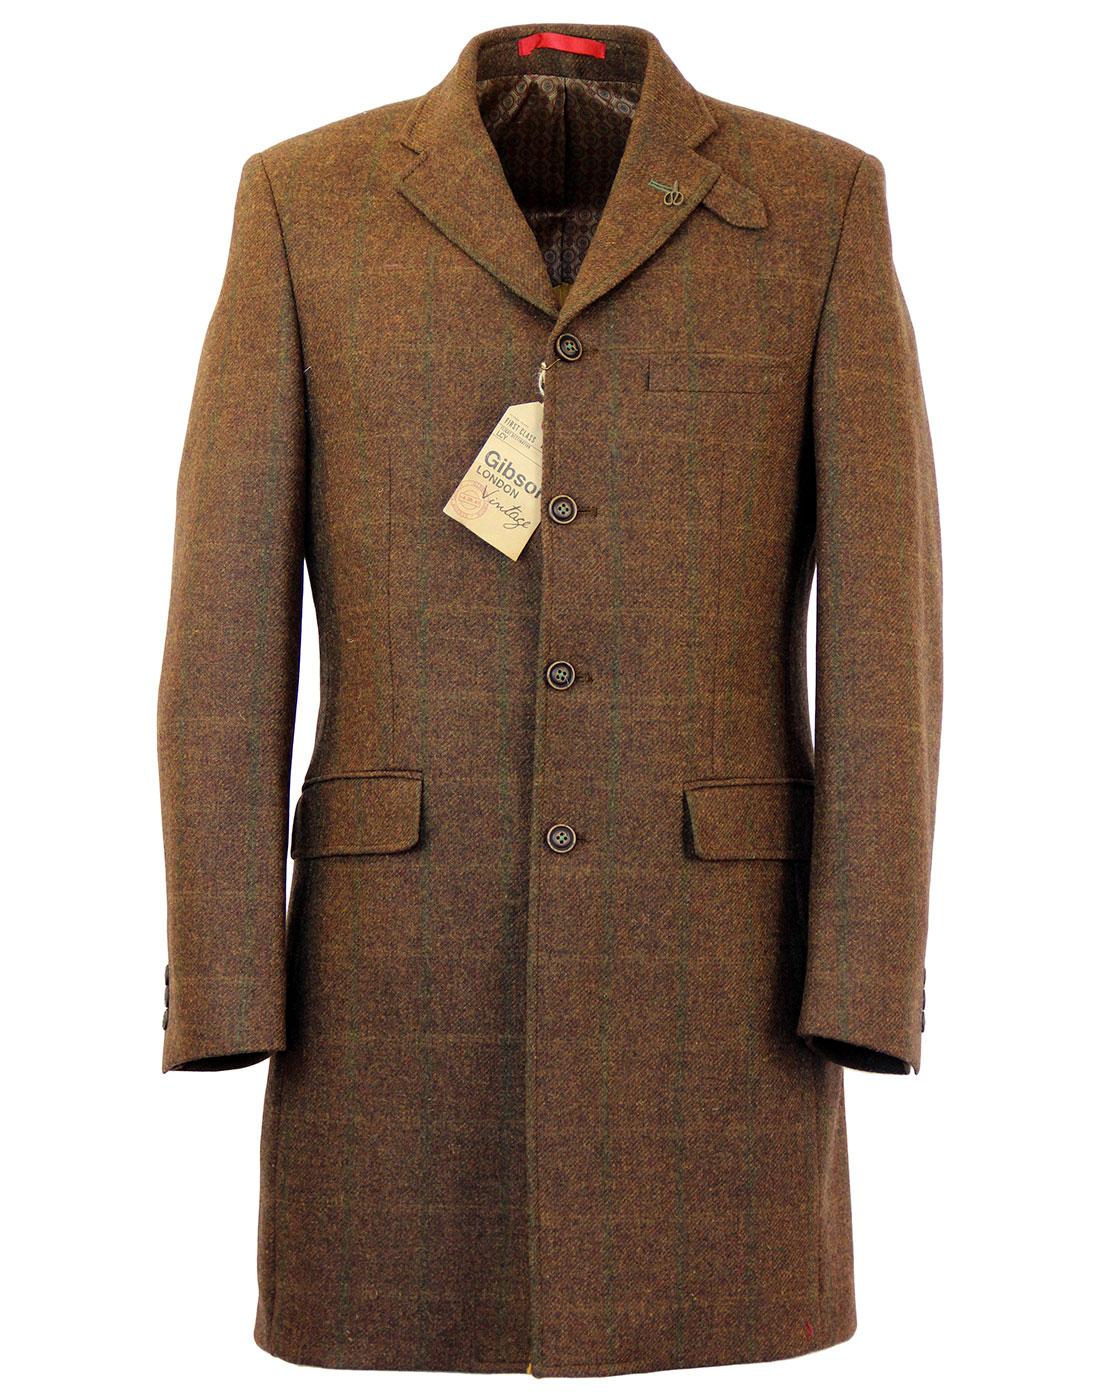 Winnie GIBSON LONDON Mod Check 3/4 Length Jacket